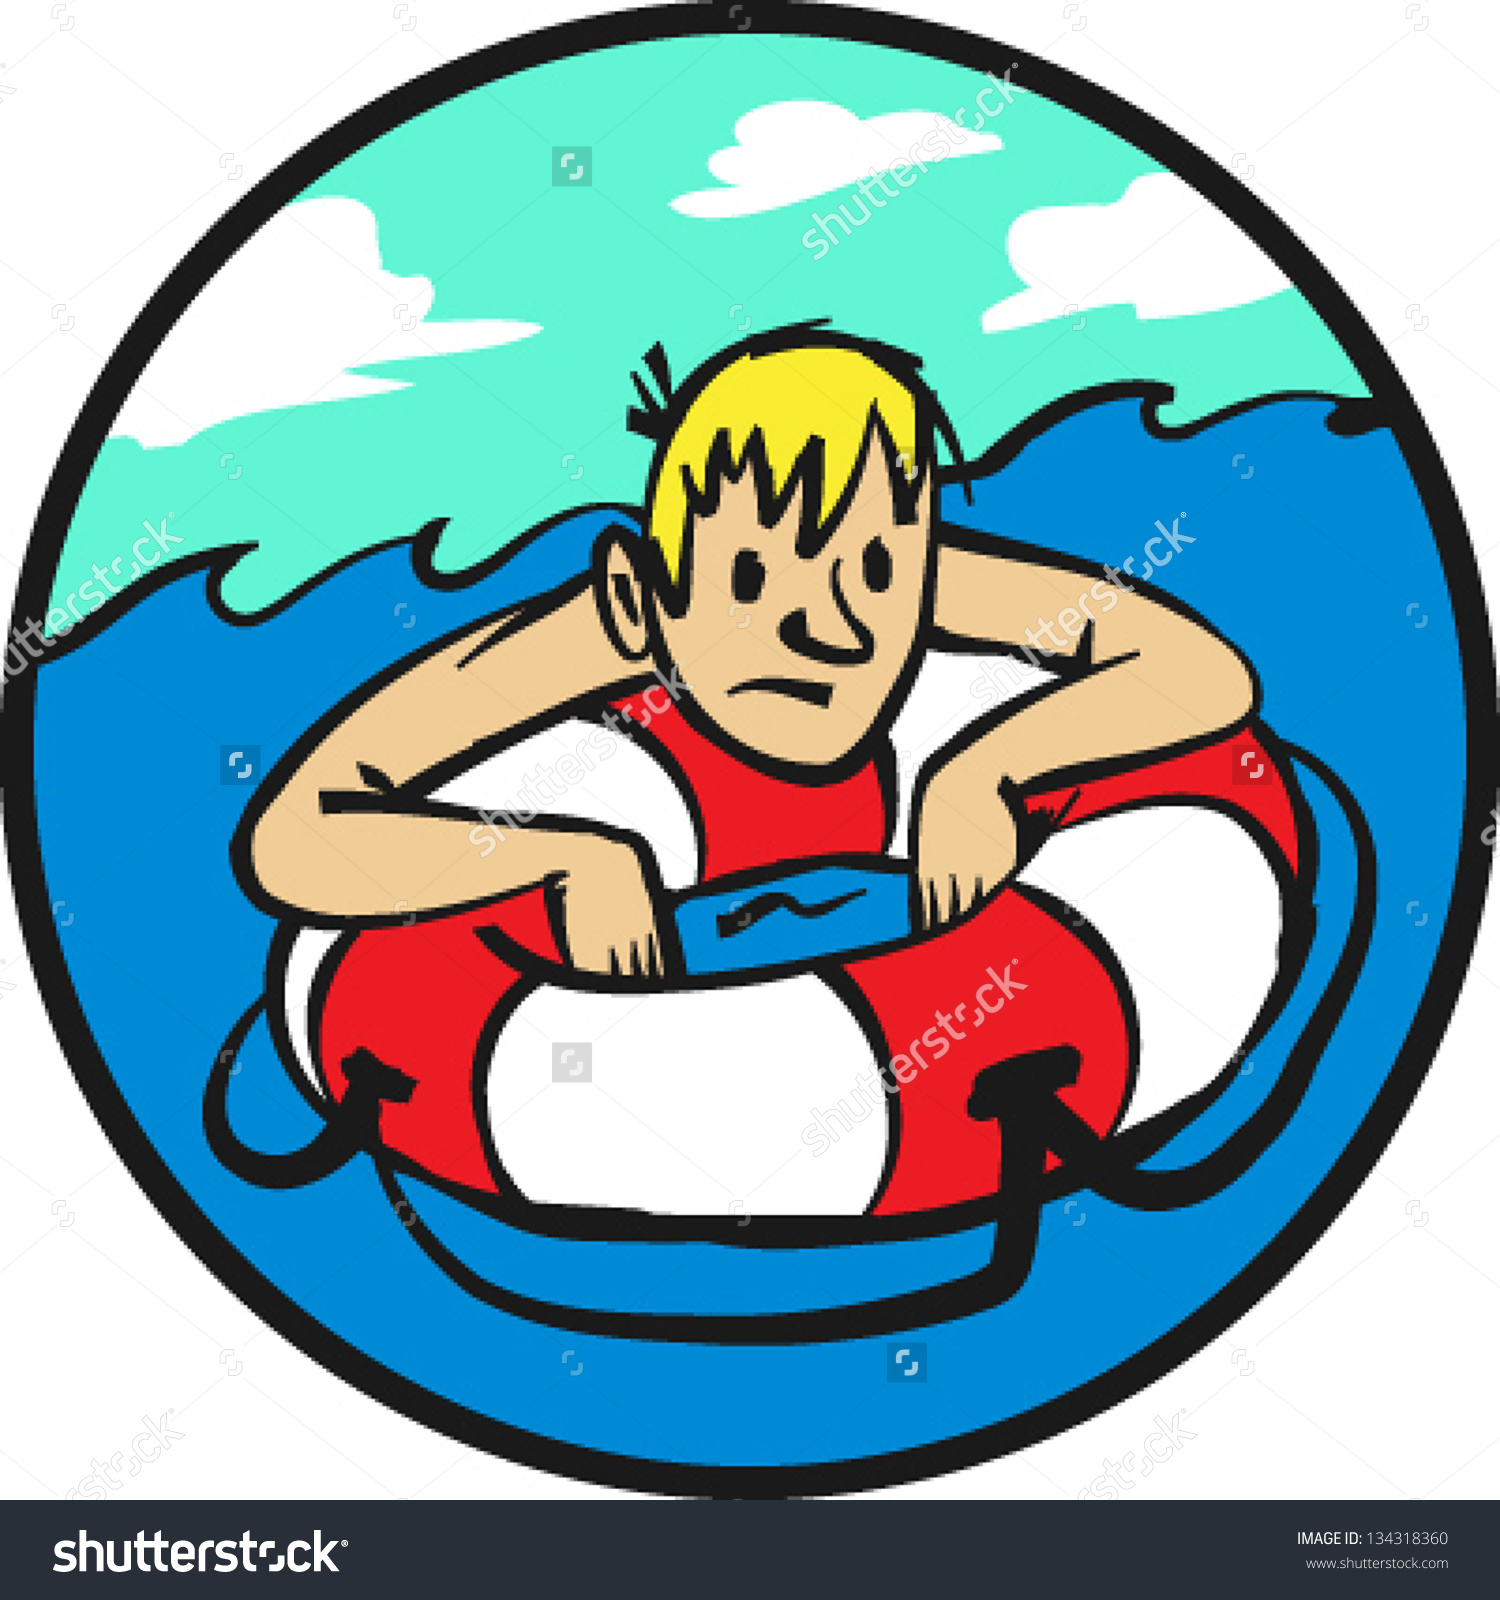 Drowning Cartoon - ClipArt Best